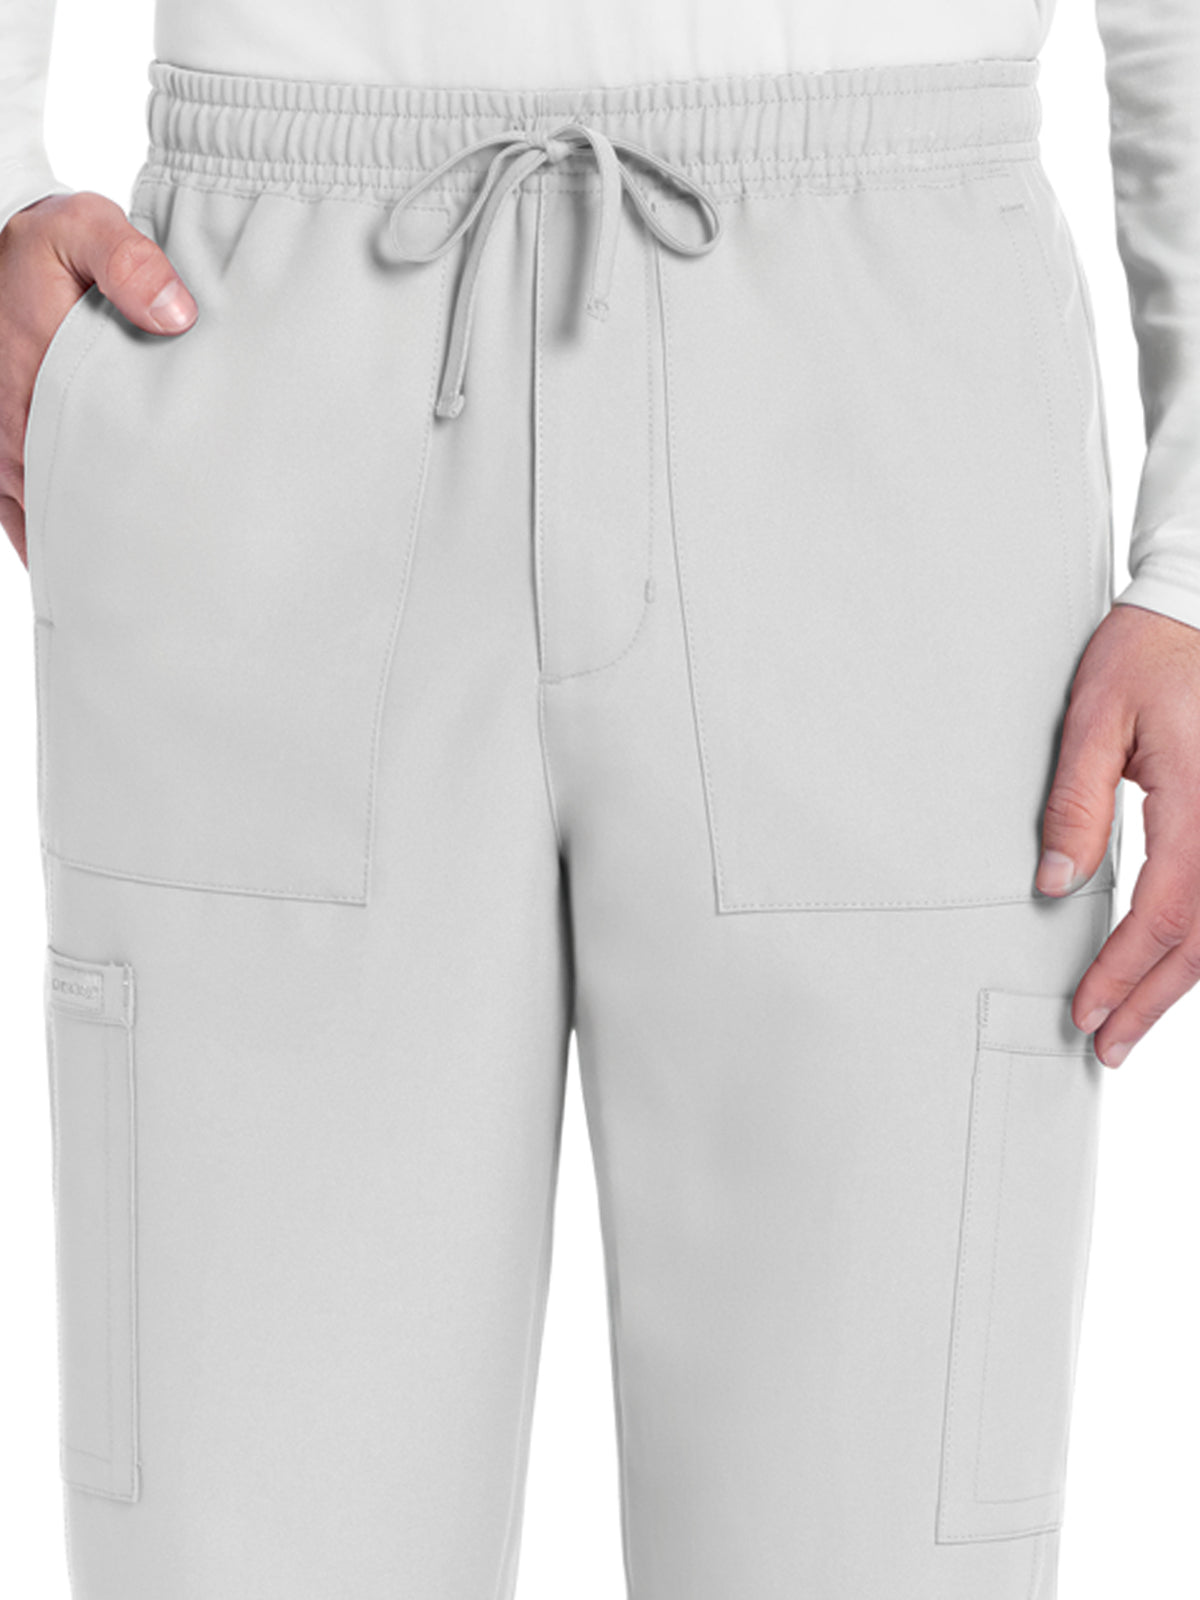 Men's 6-Pocket Straight Leg Pant - CK279A - White